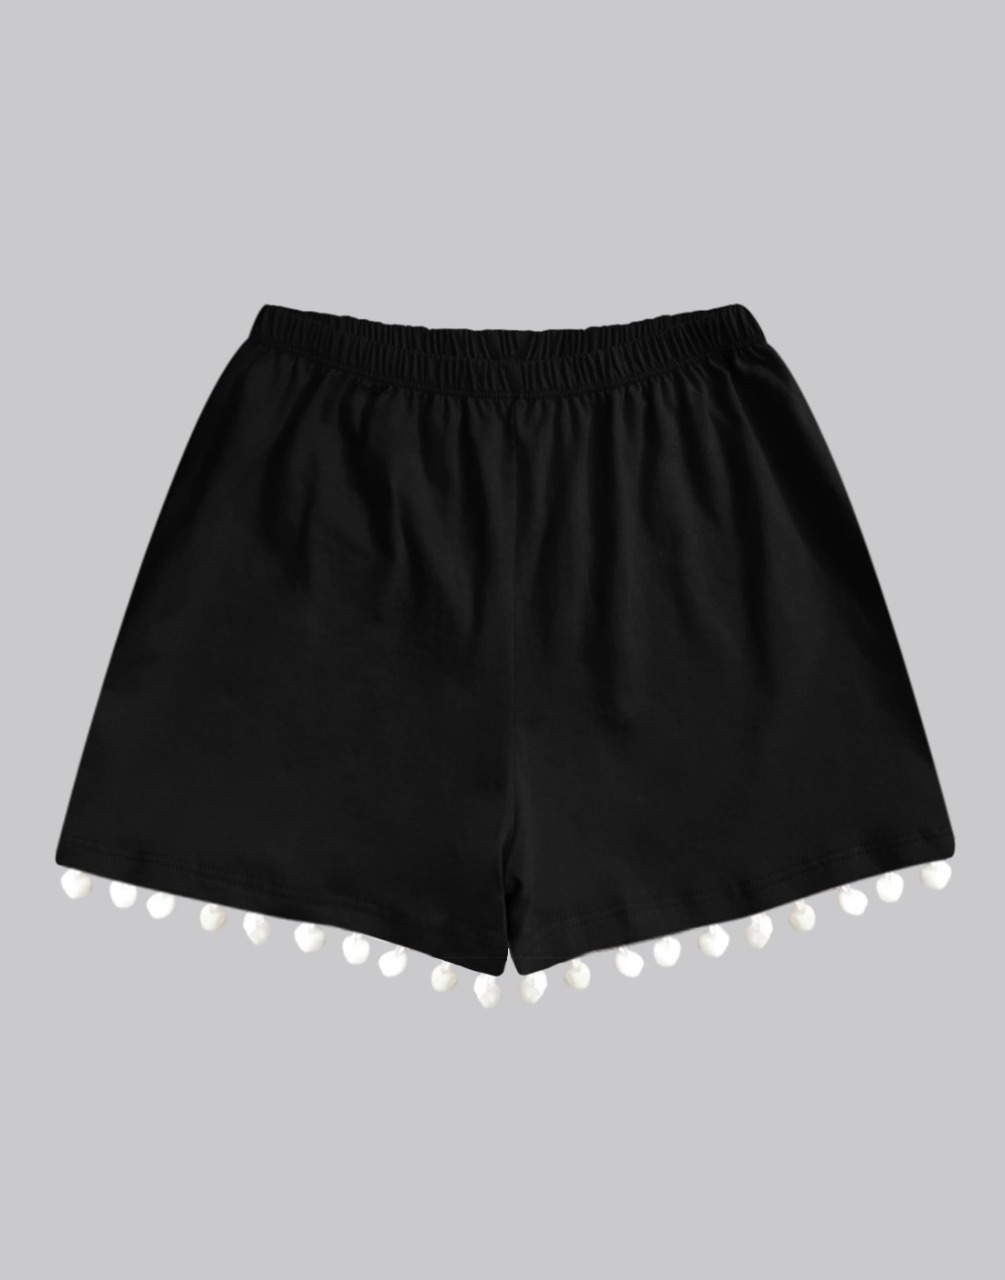 Black Pompom Women's shorts - A.T.U.N.